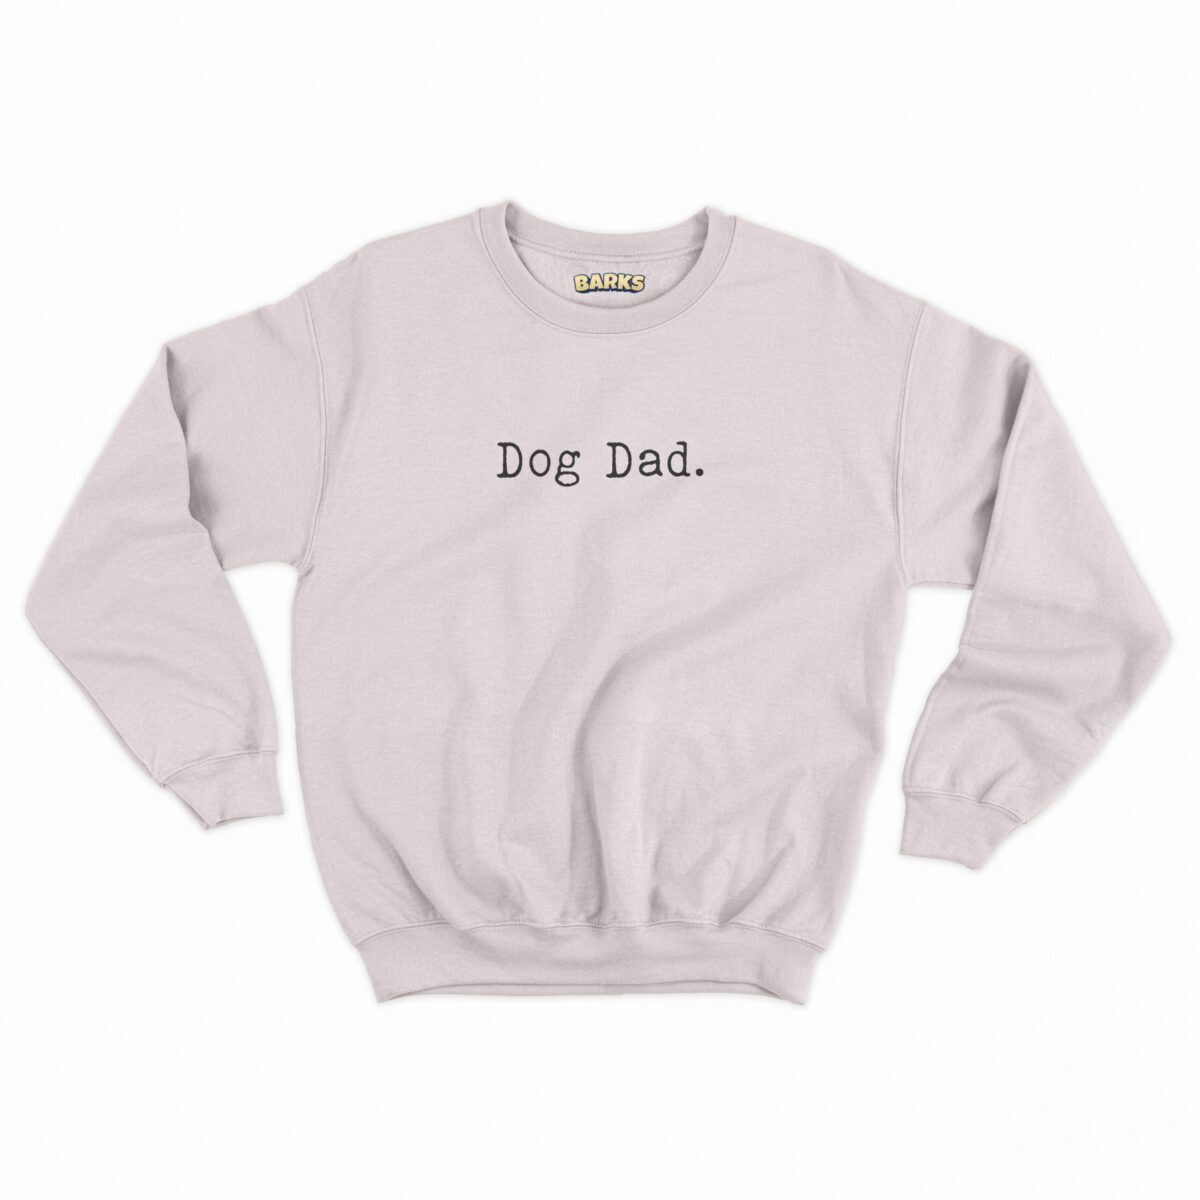 barks sweater dog dad vintage white scaled